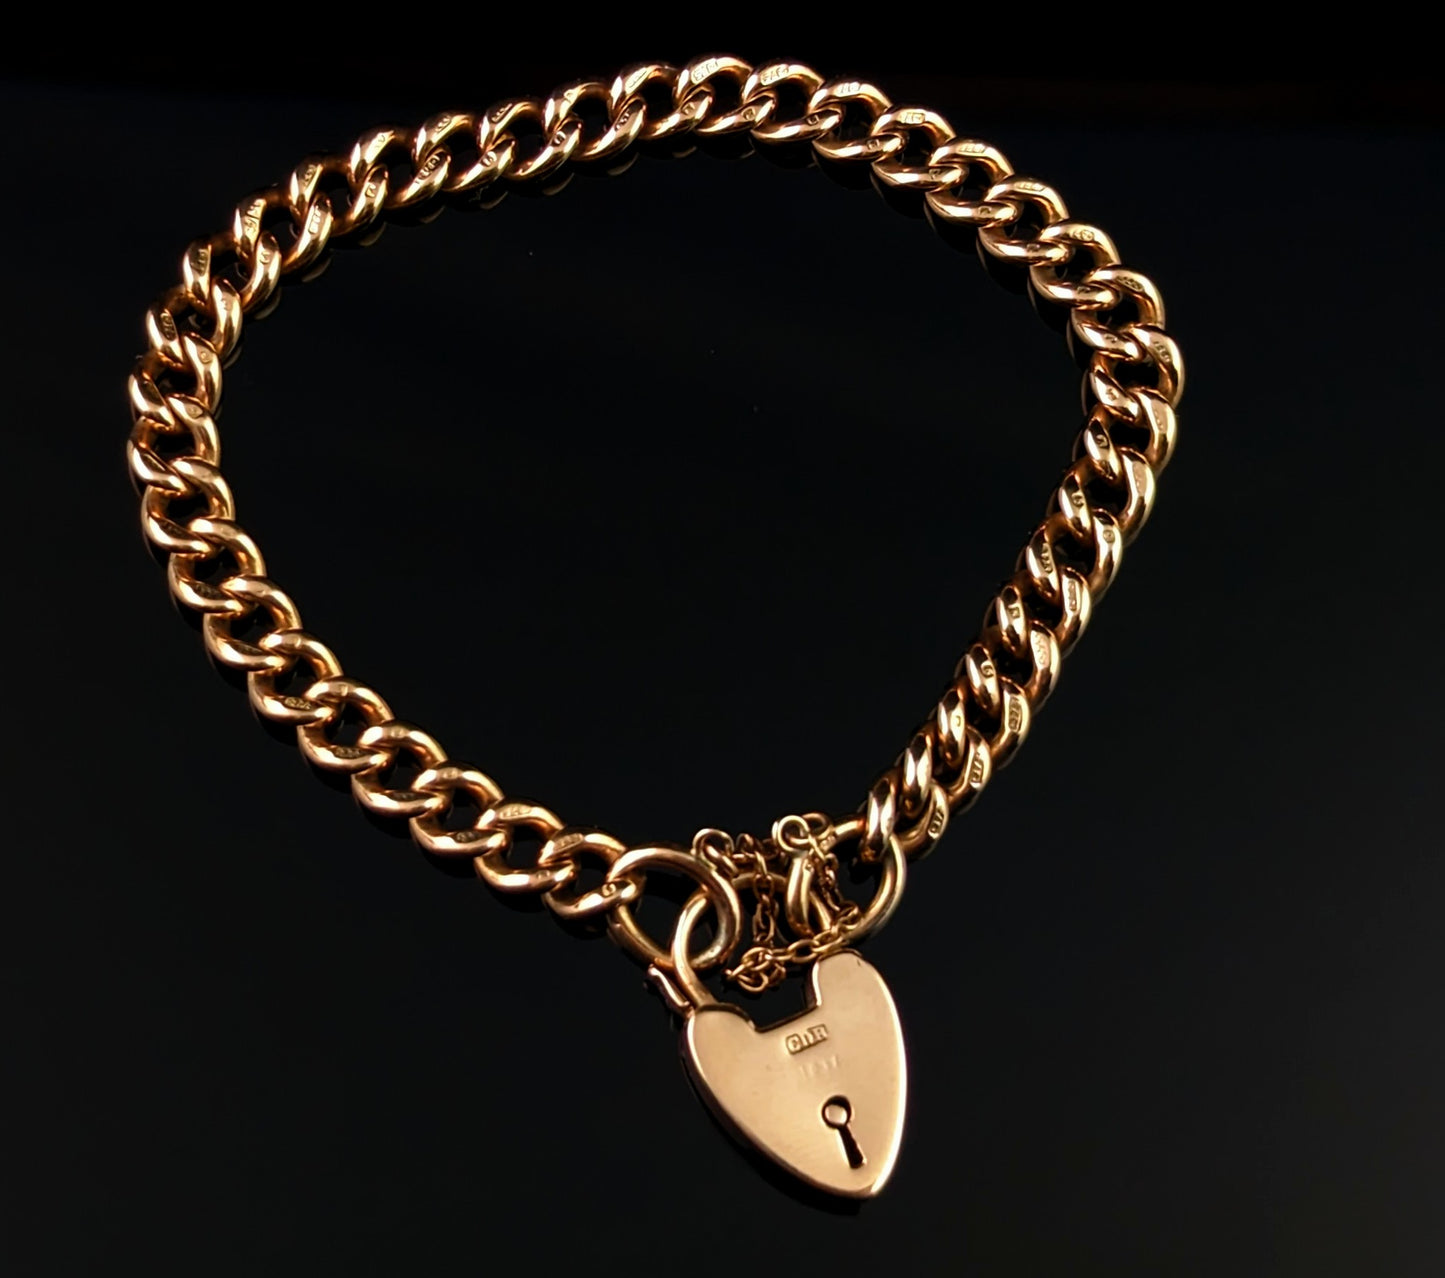 Antique 9ct solid gold curb bracelet, Edwardian, heart padlock clasp